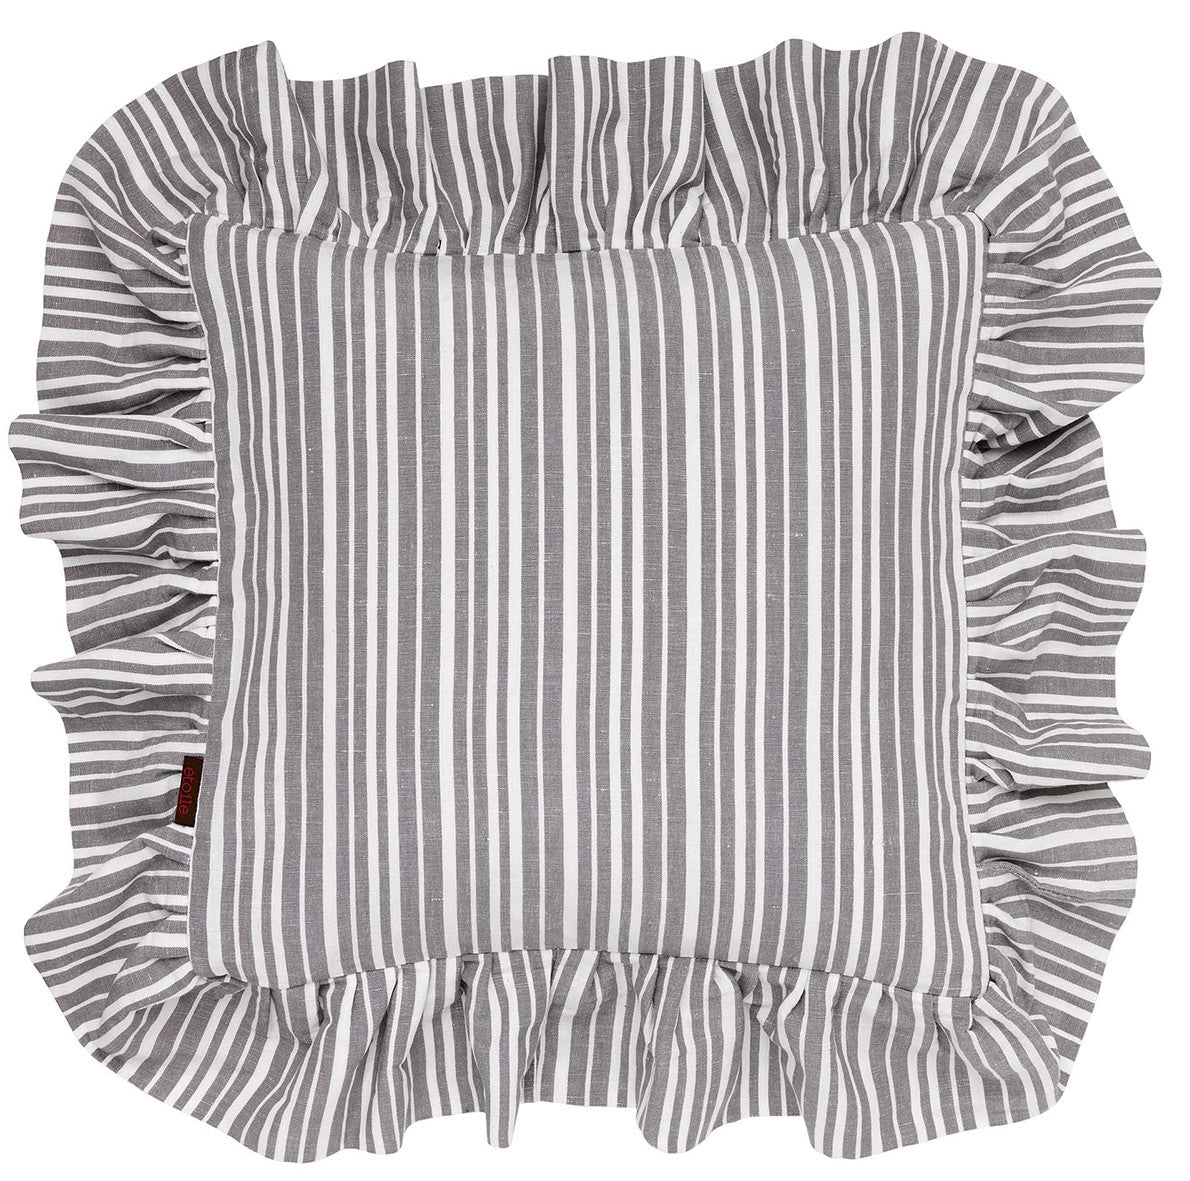 Palermo Ticking Stripe Ruffle Decorative Throw Pillow in Stone Grey 45x45cm 18x18"